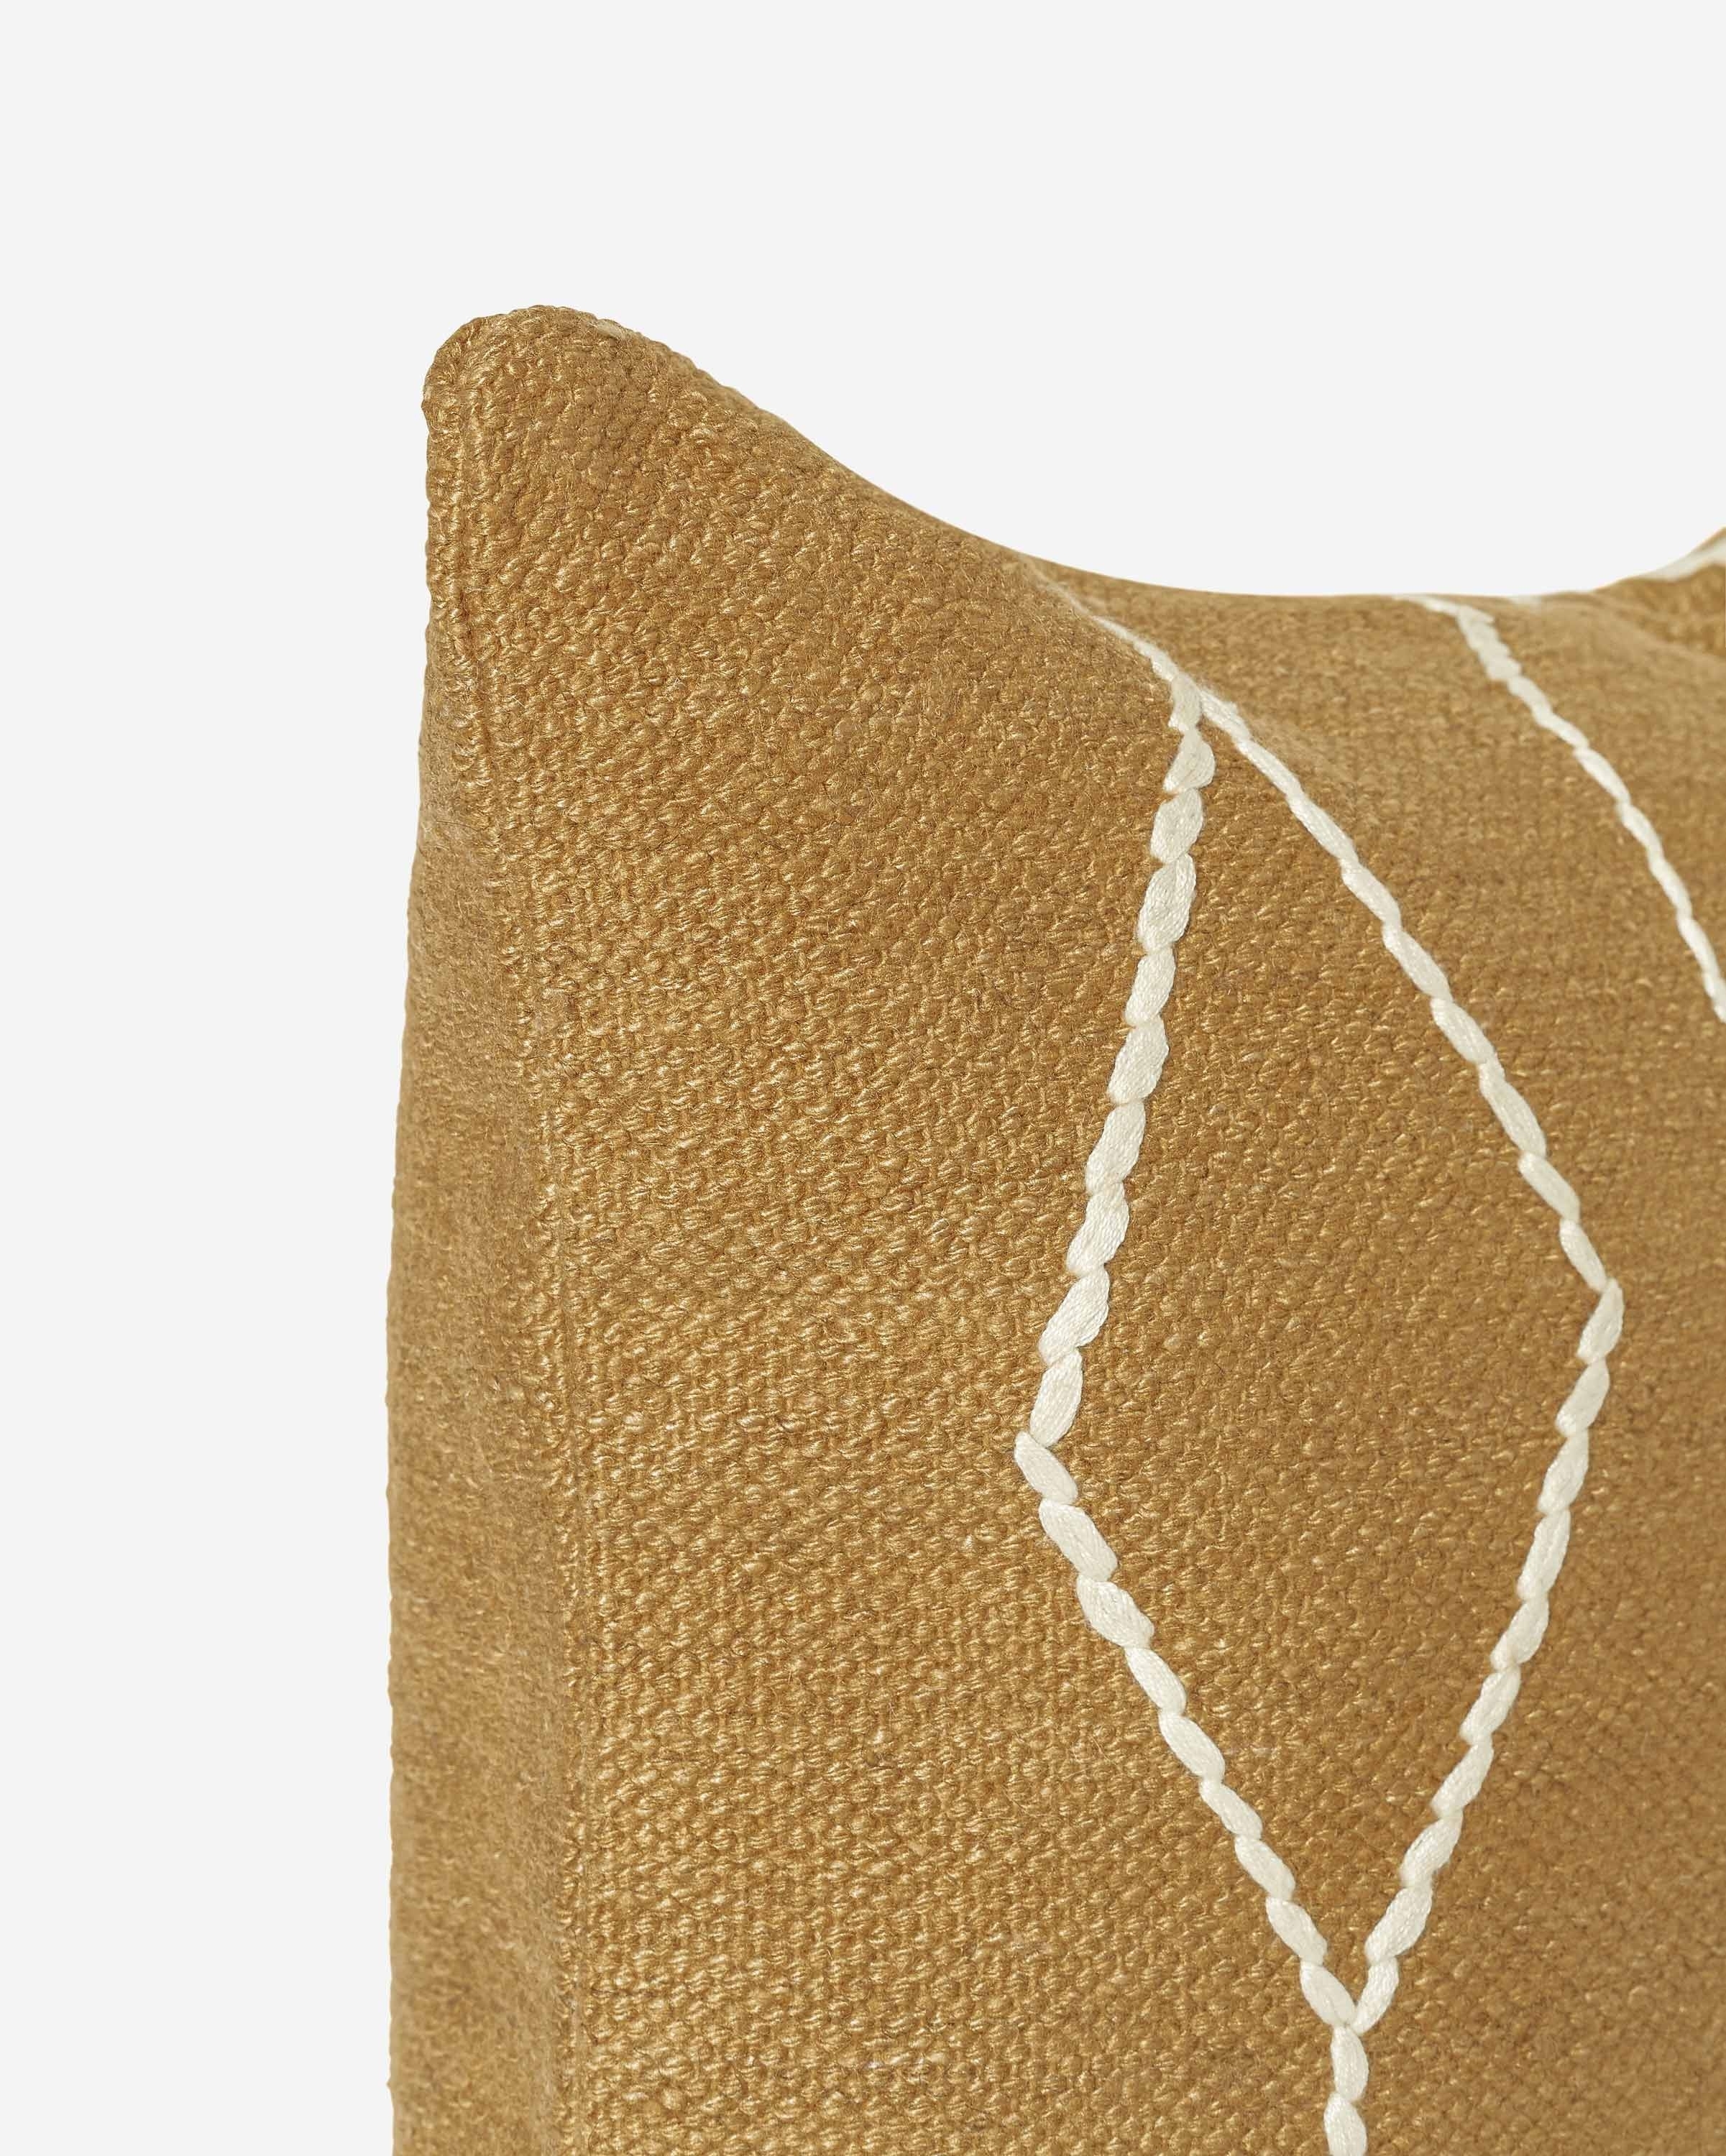 Moroccan Flatweave Lumbar Pillow, Ochre By Sarah Sherman Samuel - Image 2